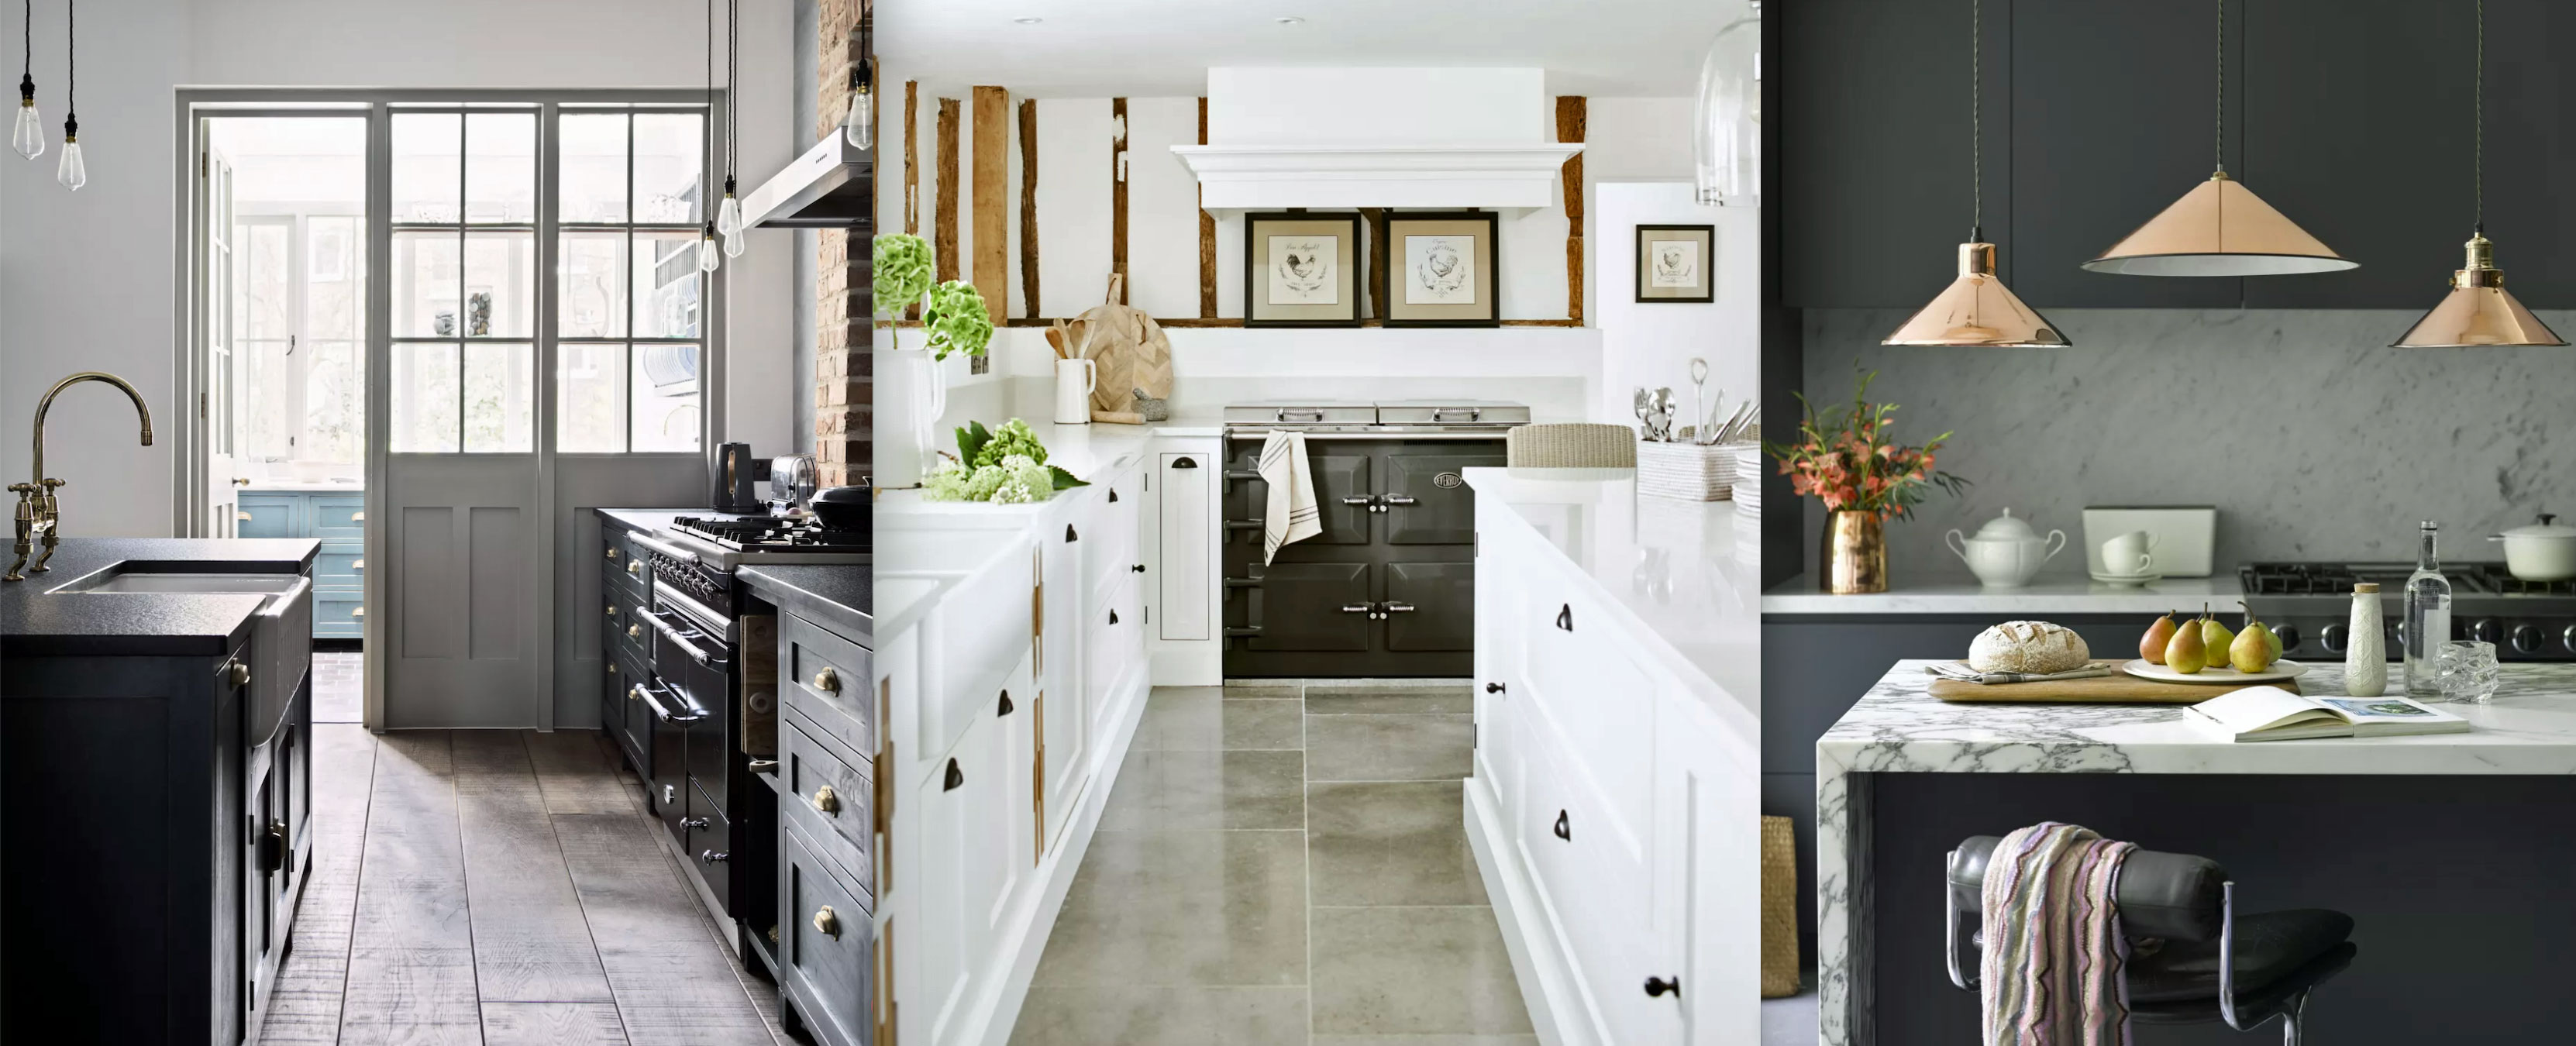 black and white kitchen ideas: 10 beautiful designs |